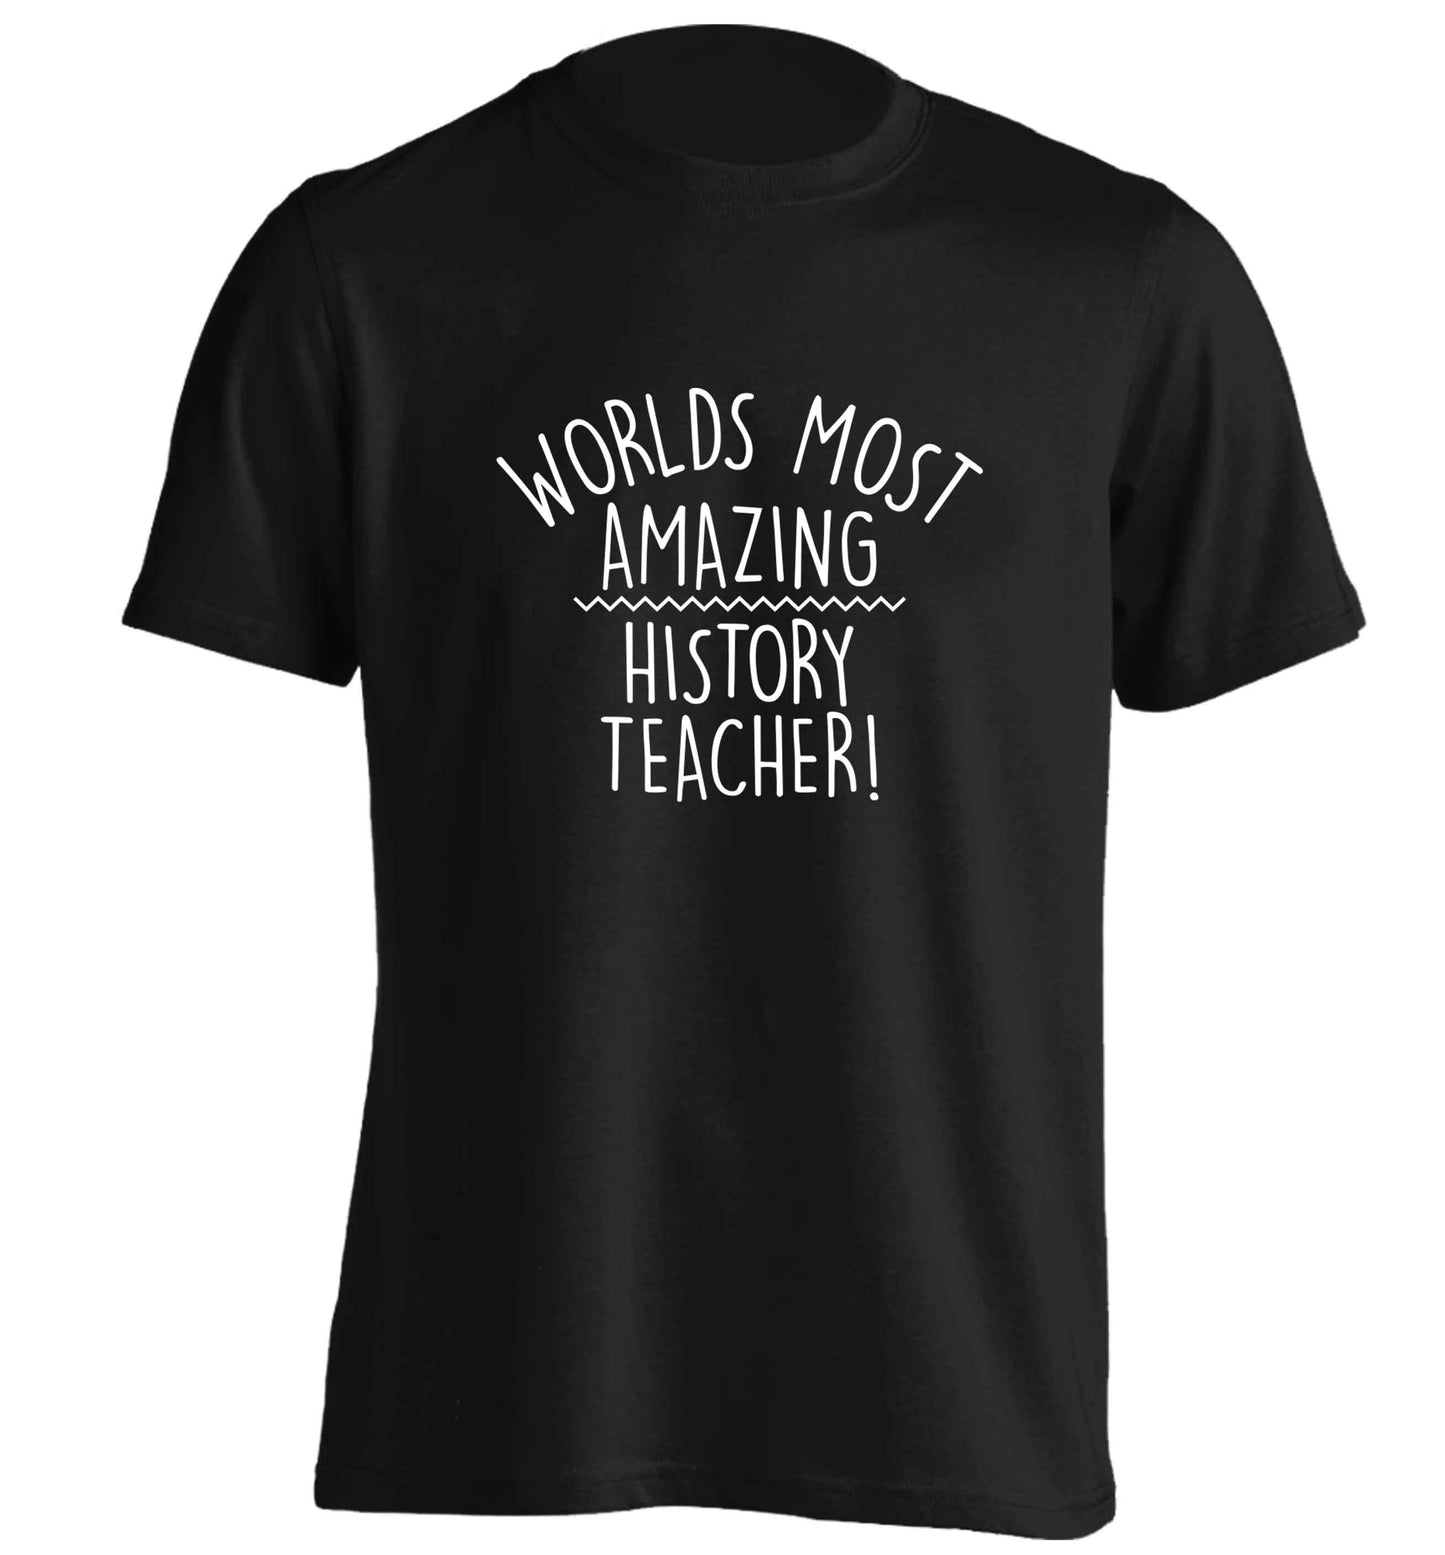 Worlds most amazing History teacher adults unisex black Tshirt 2XL